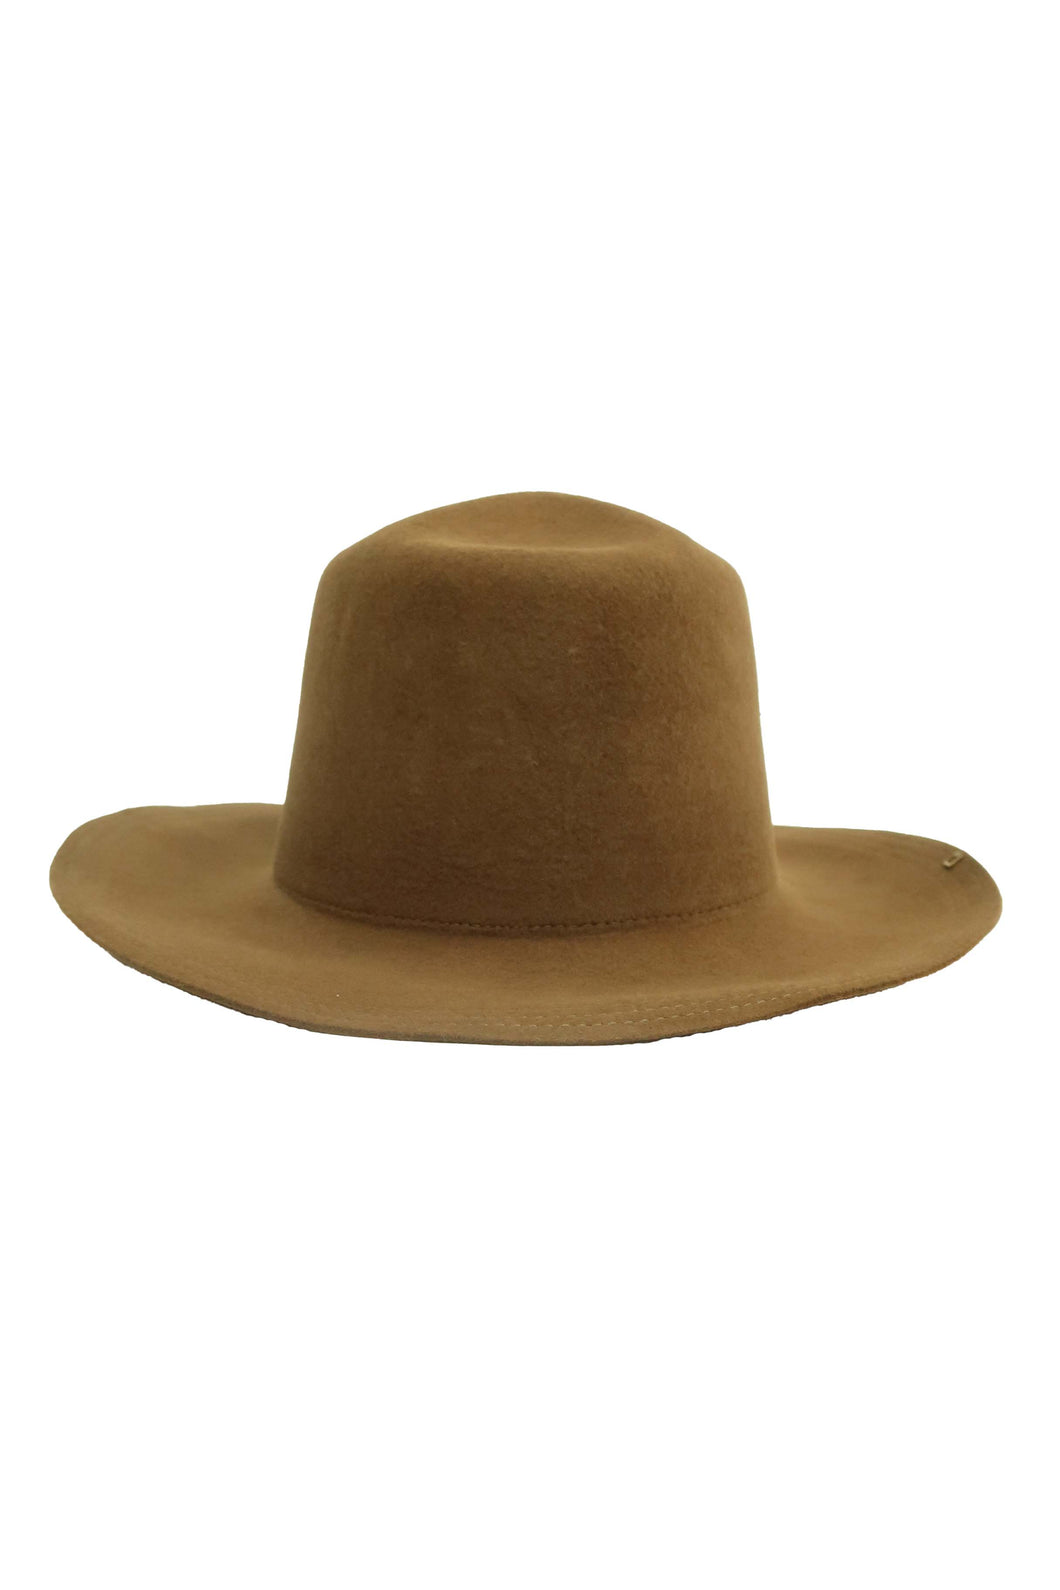 New Zealand Type 1/Type 4 Lemon Squeezer hat